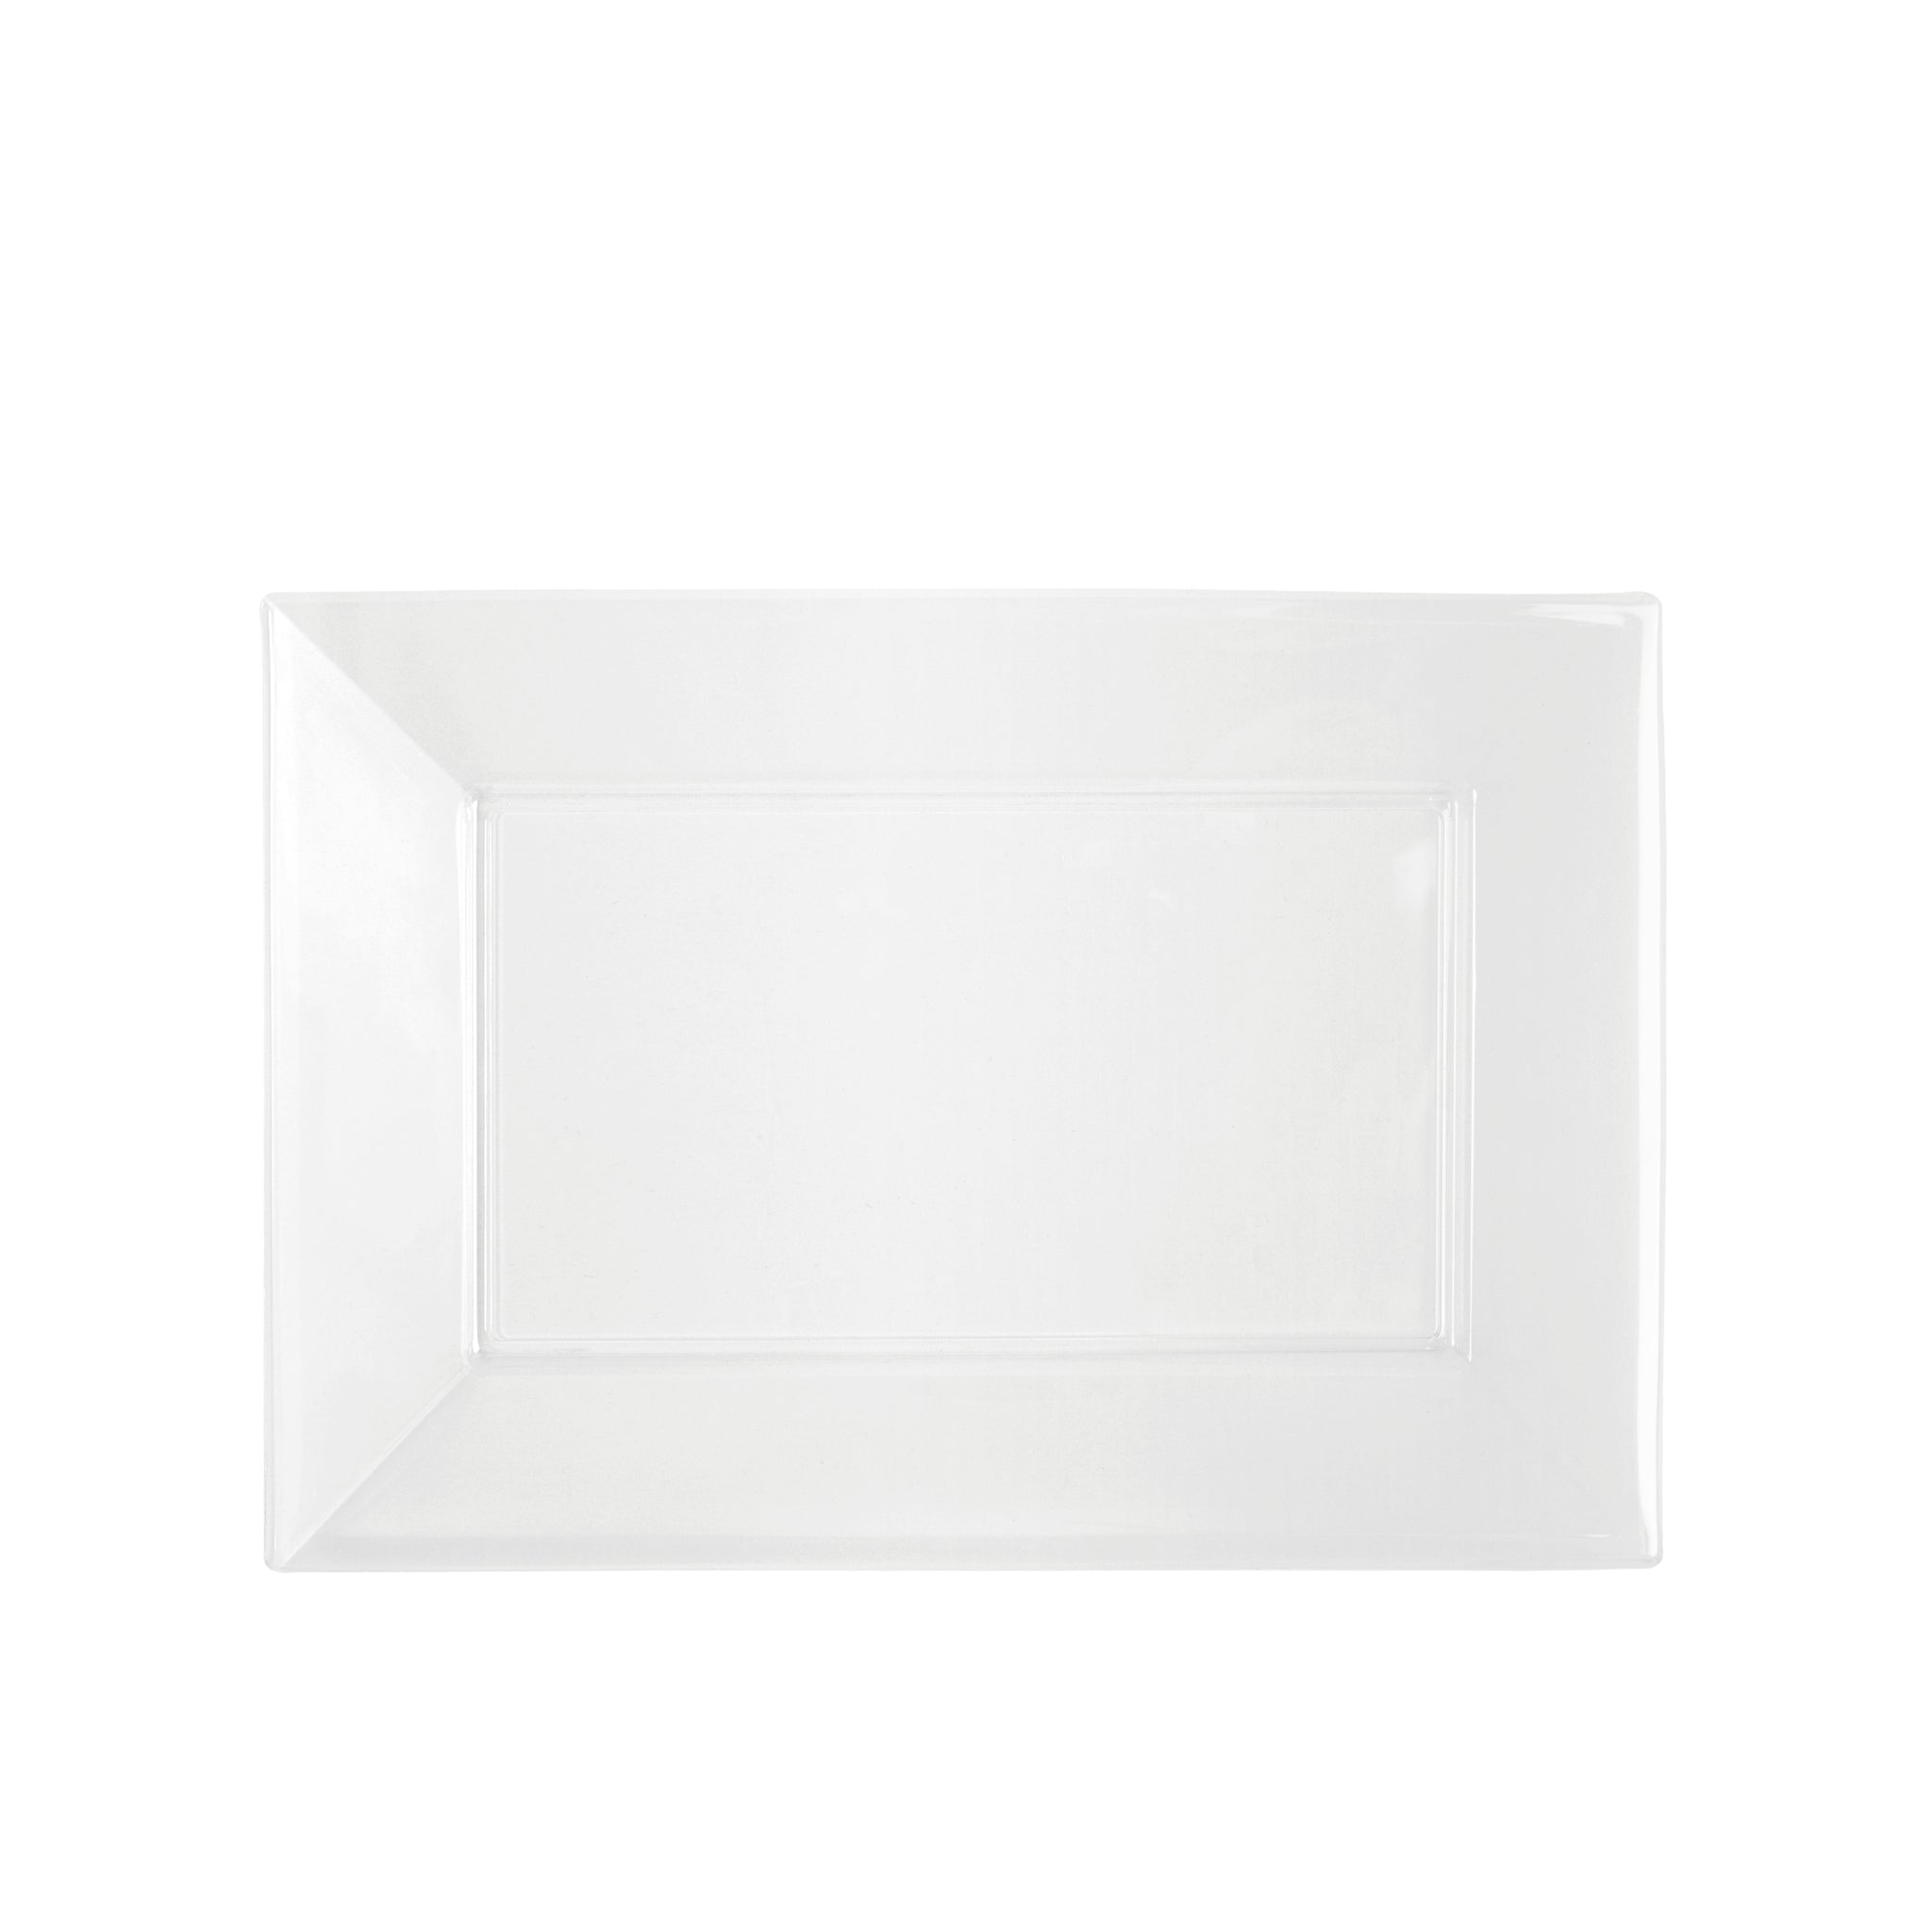 Rectangular plastic tray 33 x 22.5 cm white